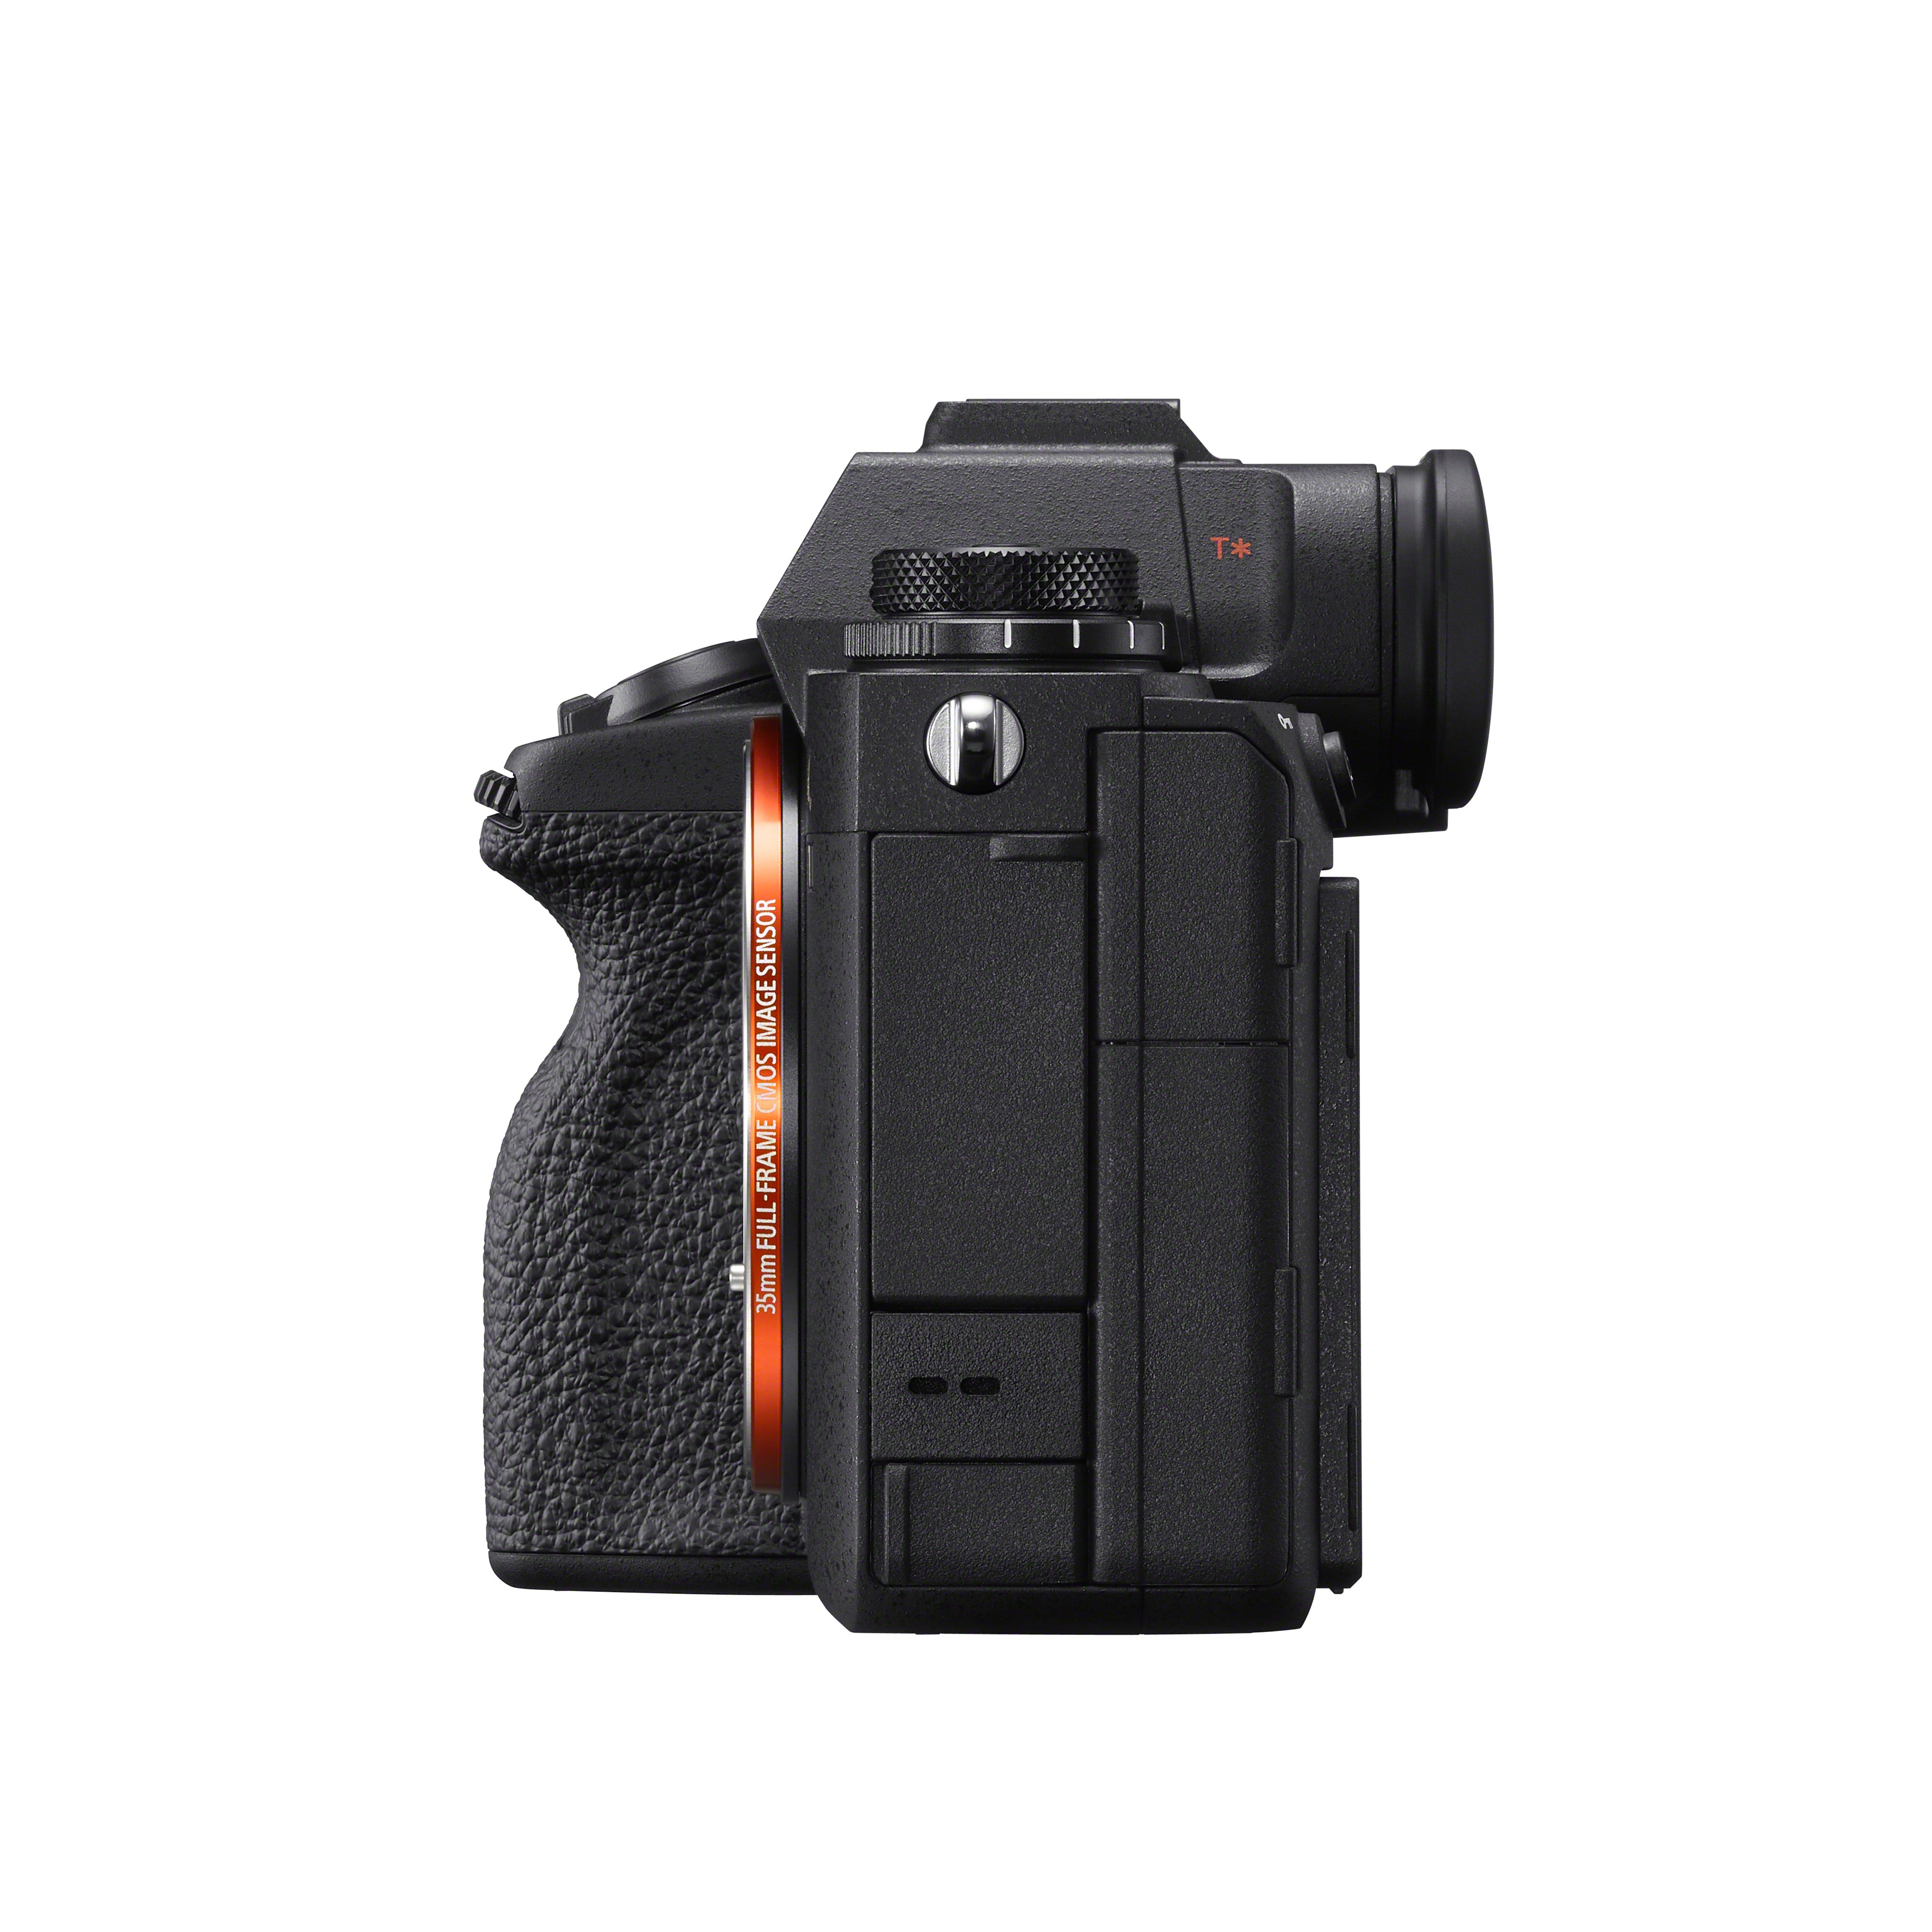 Alpha 1 Full-frame Interchangeable Lens Mirrorless Camera